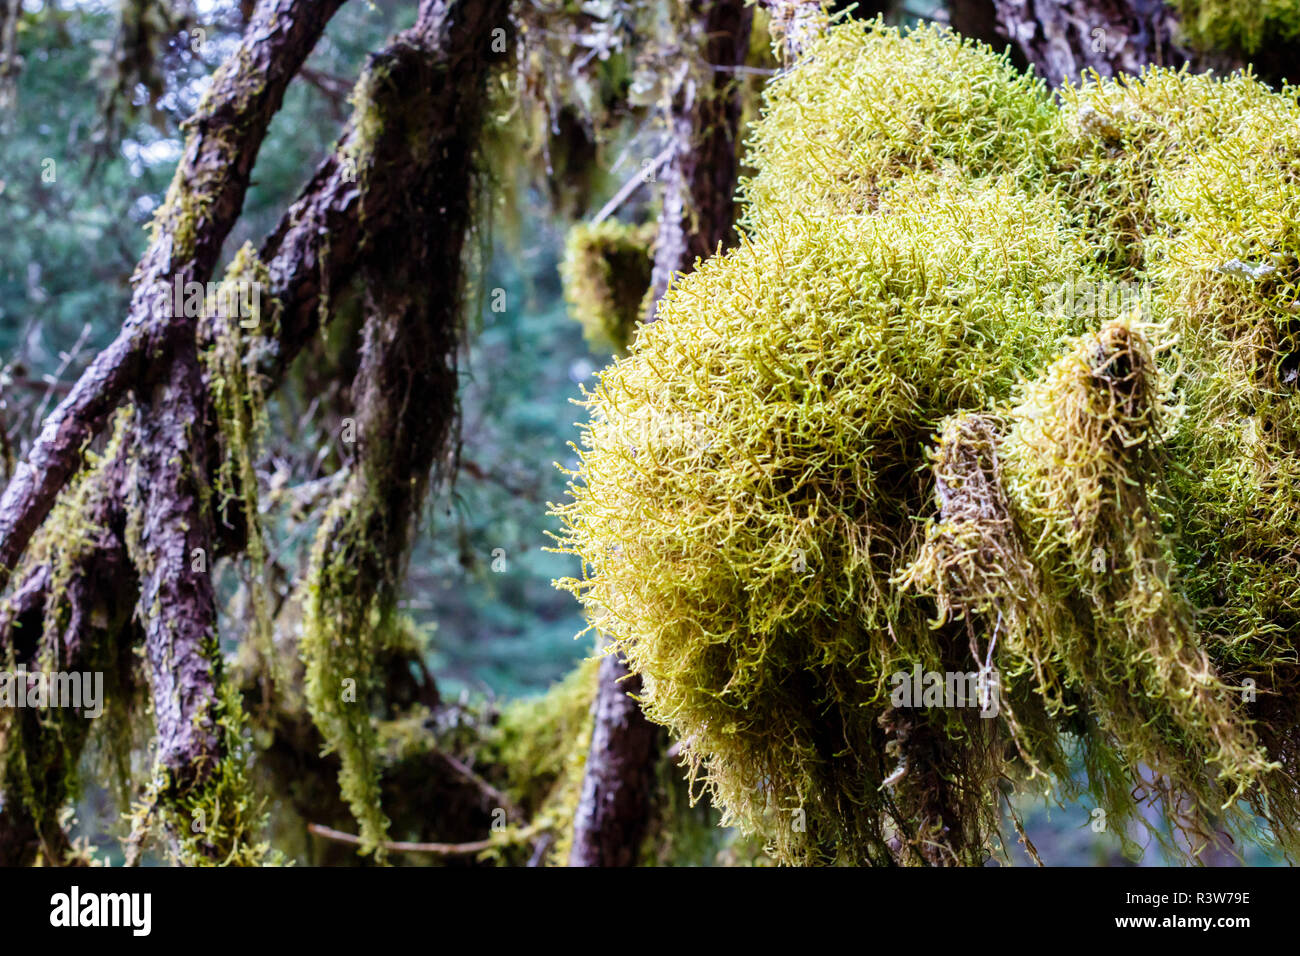 USA, Alaska. Virgin Creek Falls, tree branch with moss. Stock Photo